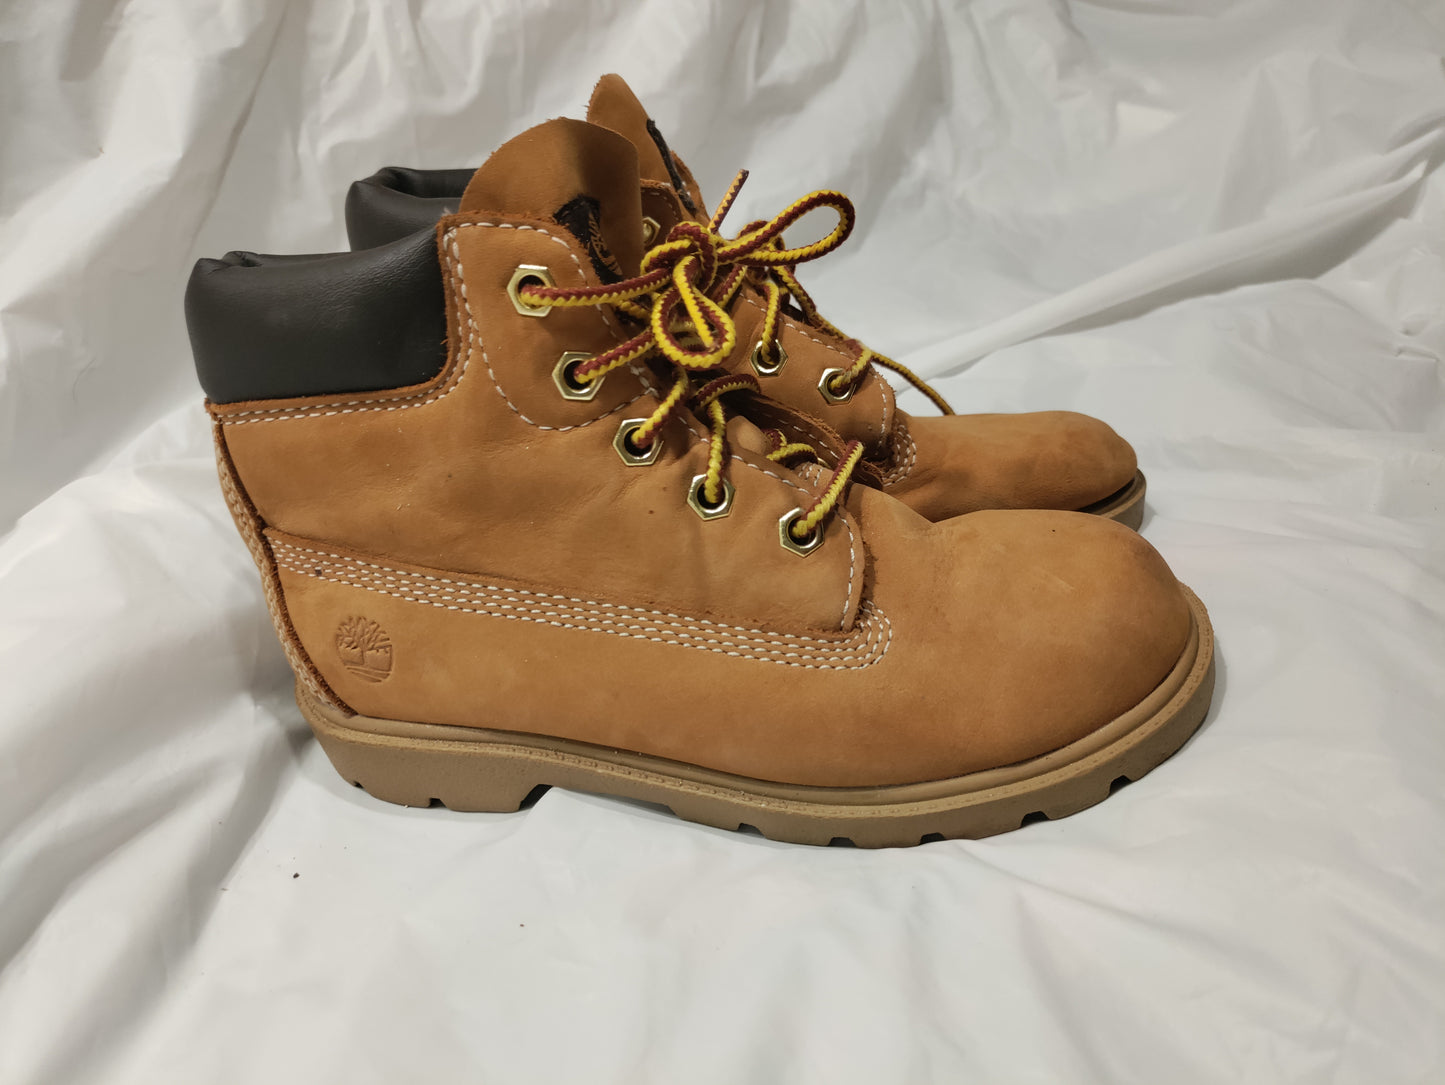 Timberland boots size 11c EUC